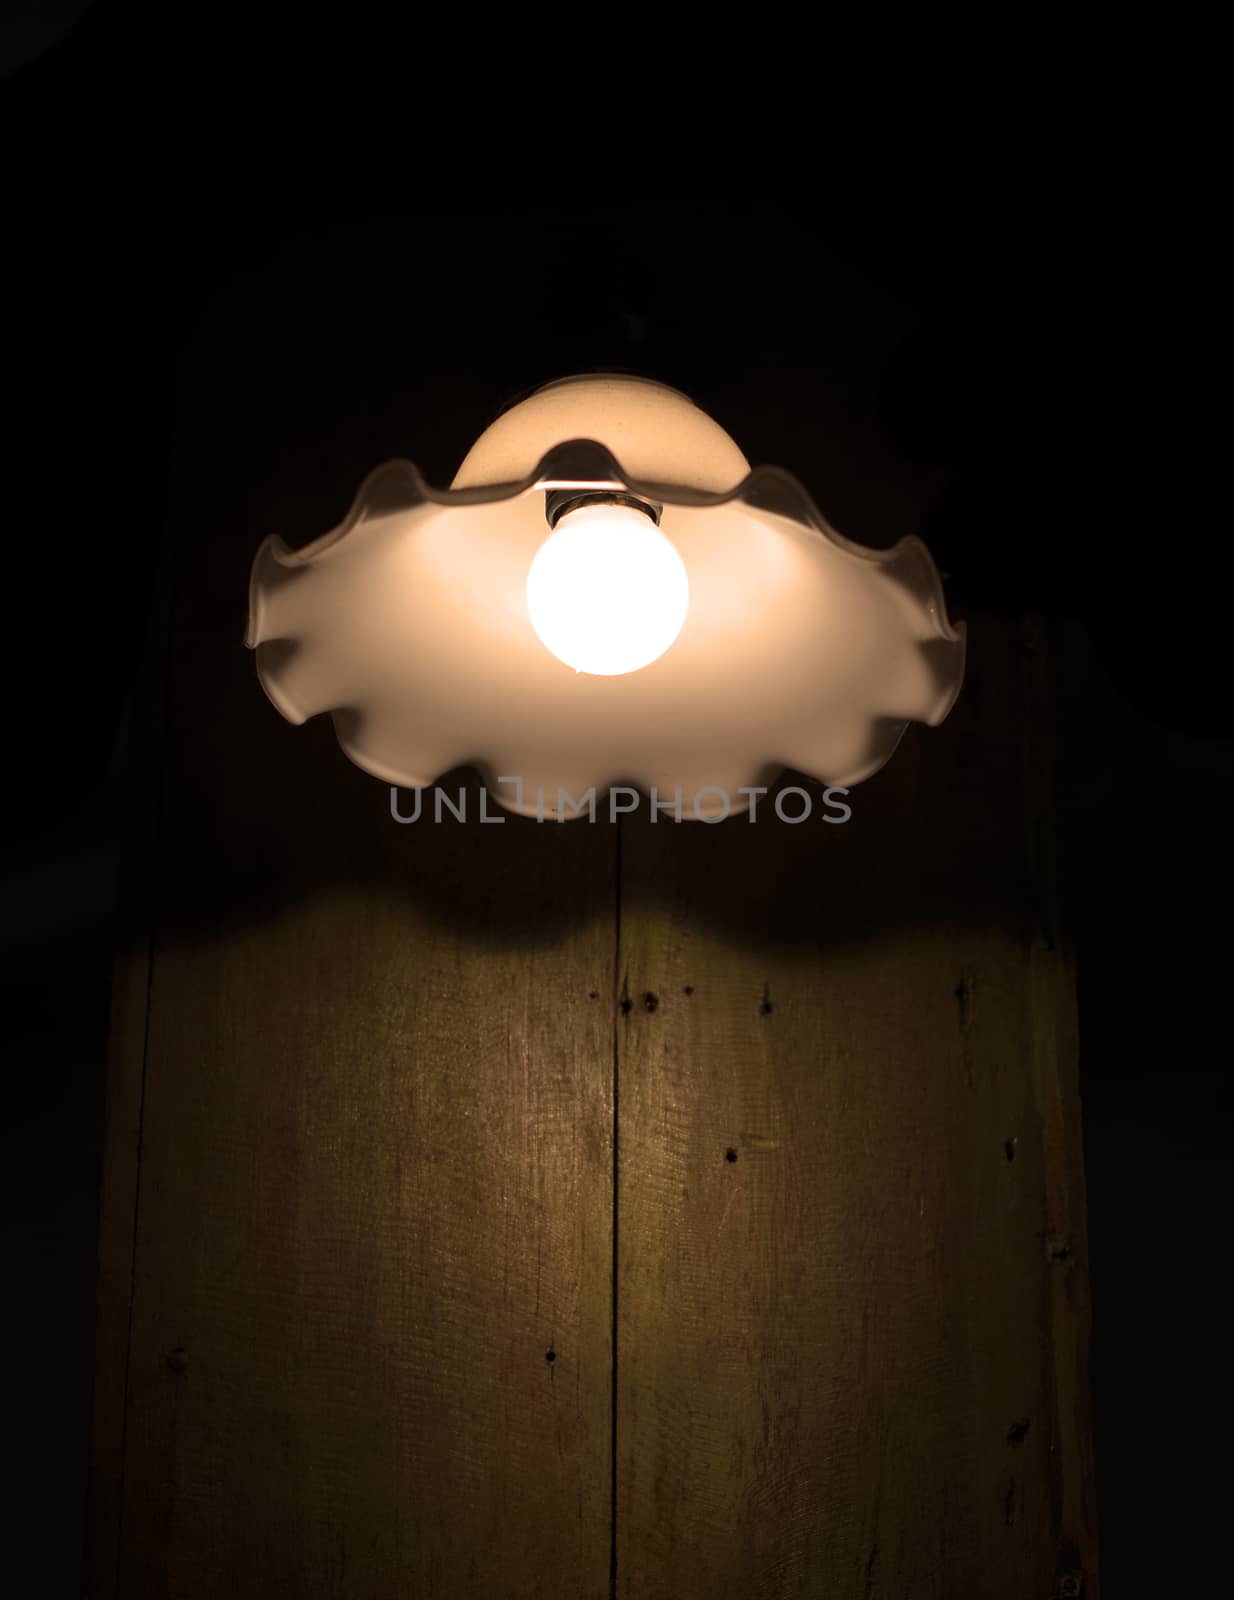 Lamp on a wall shining